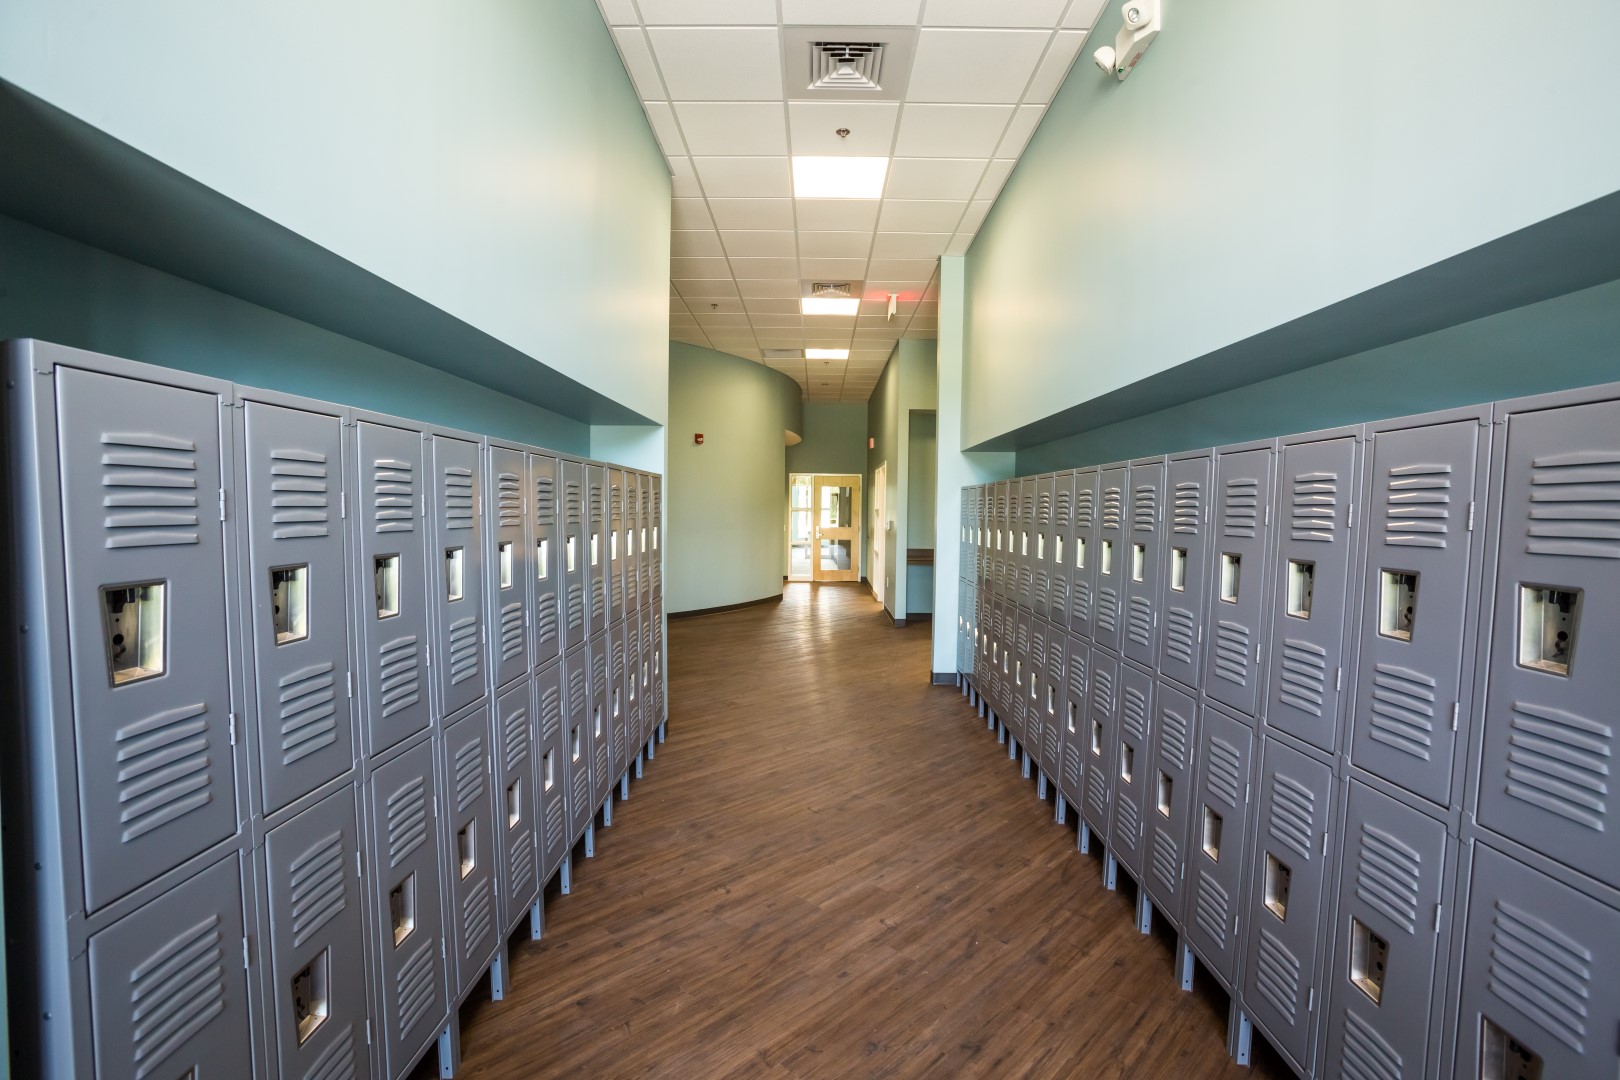 Washington Montessori School hallway with lockers 2